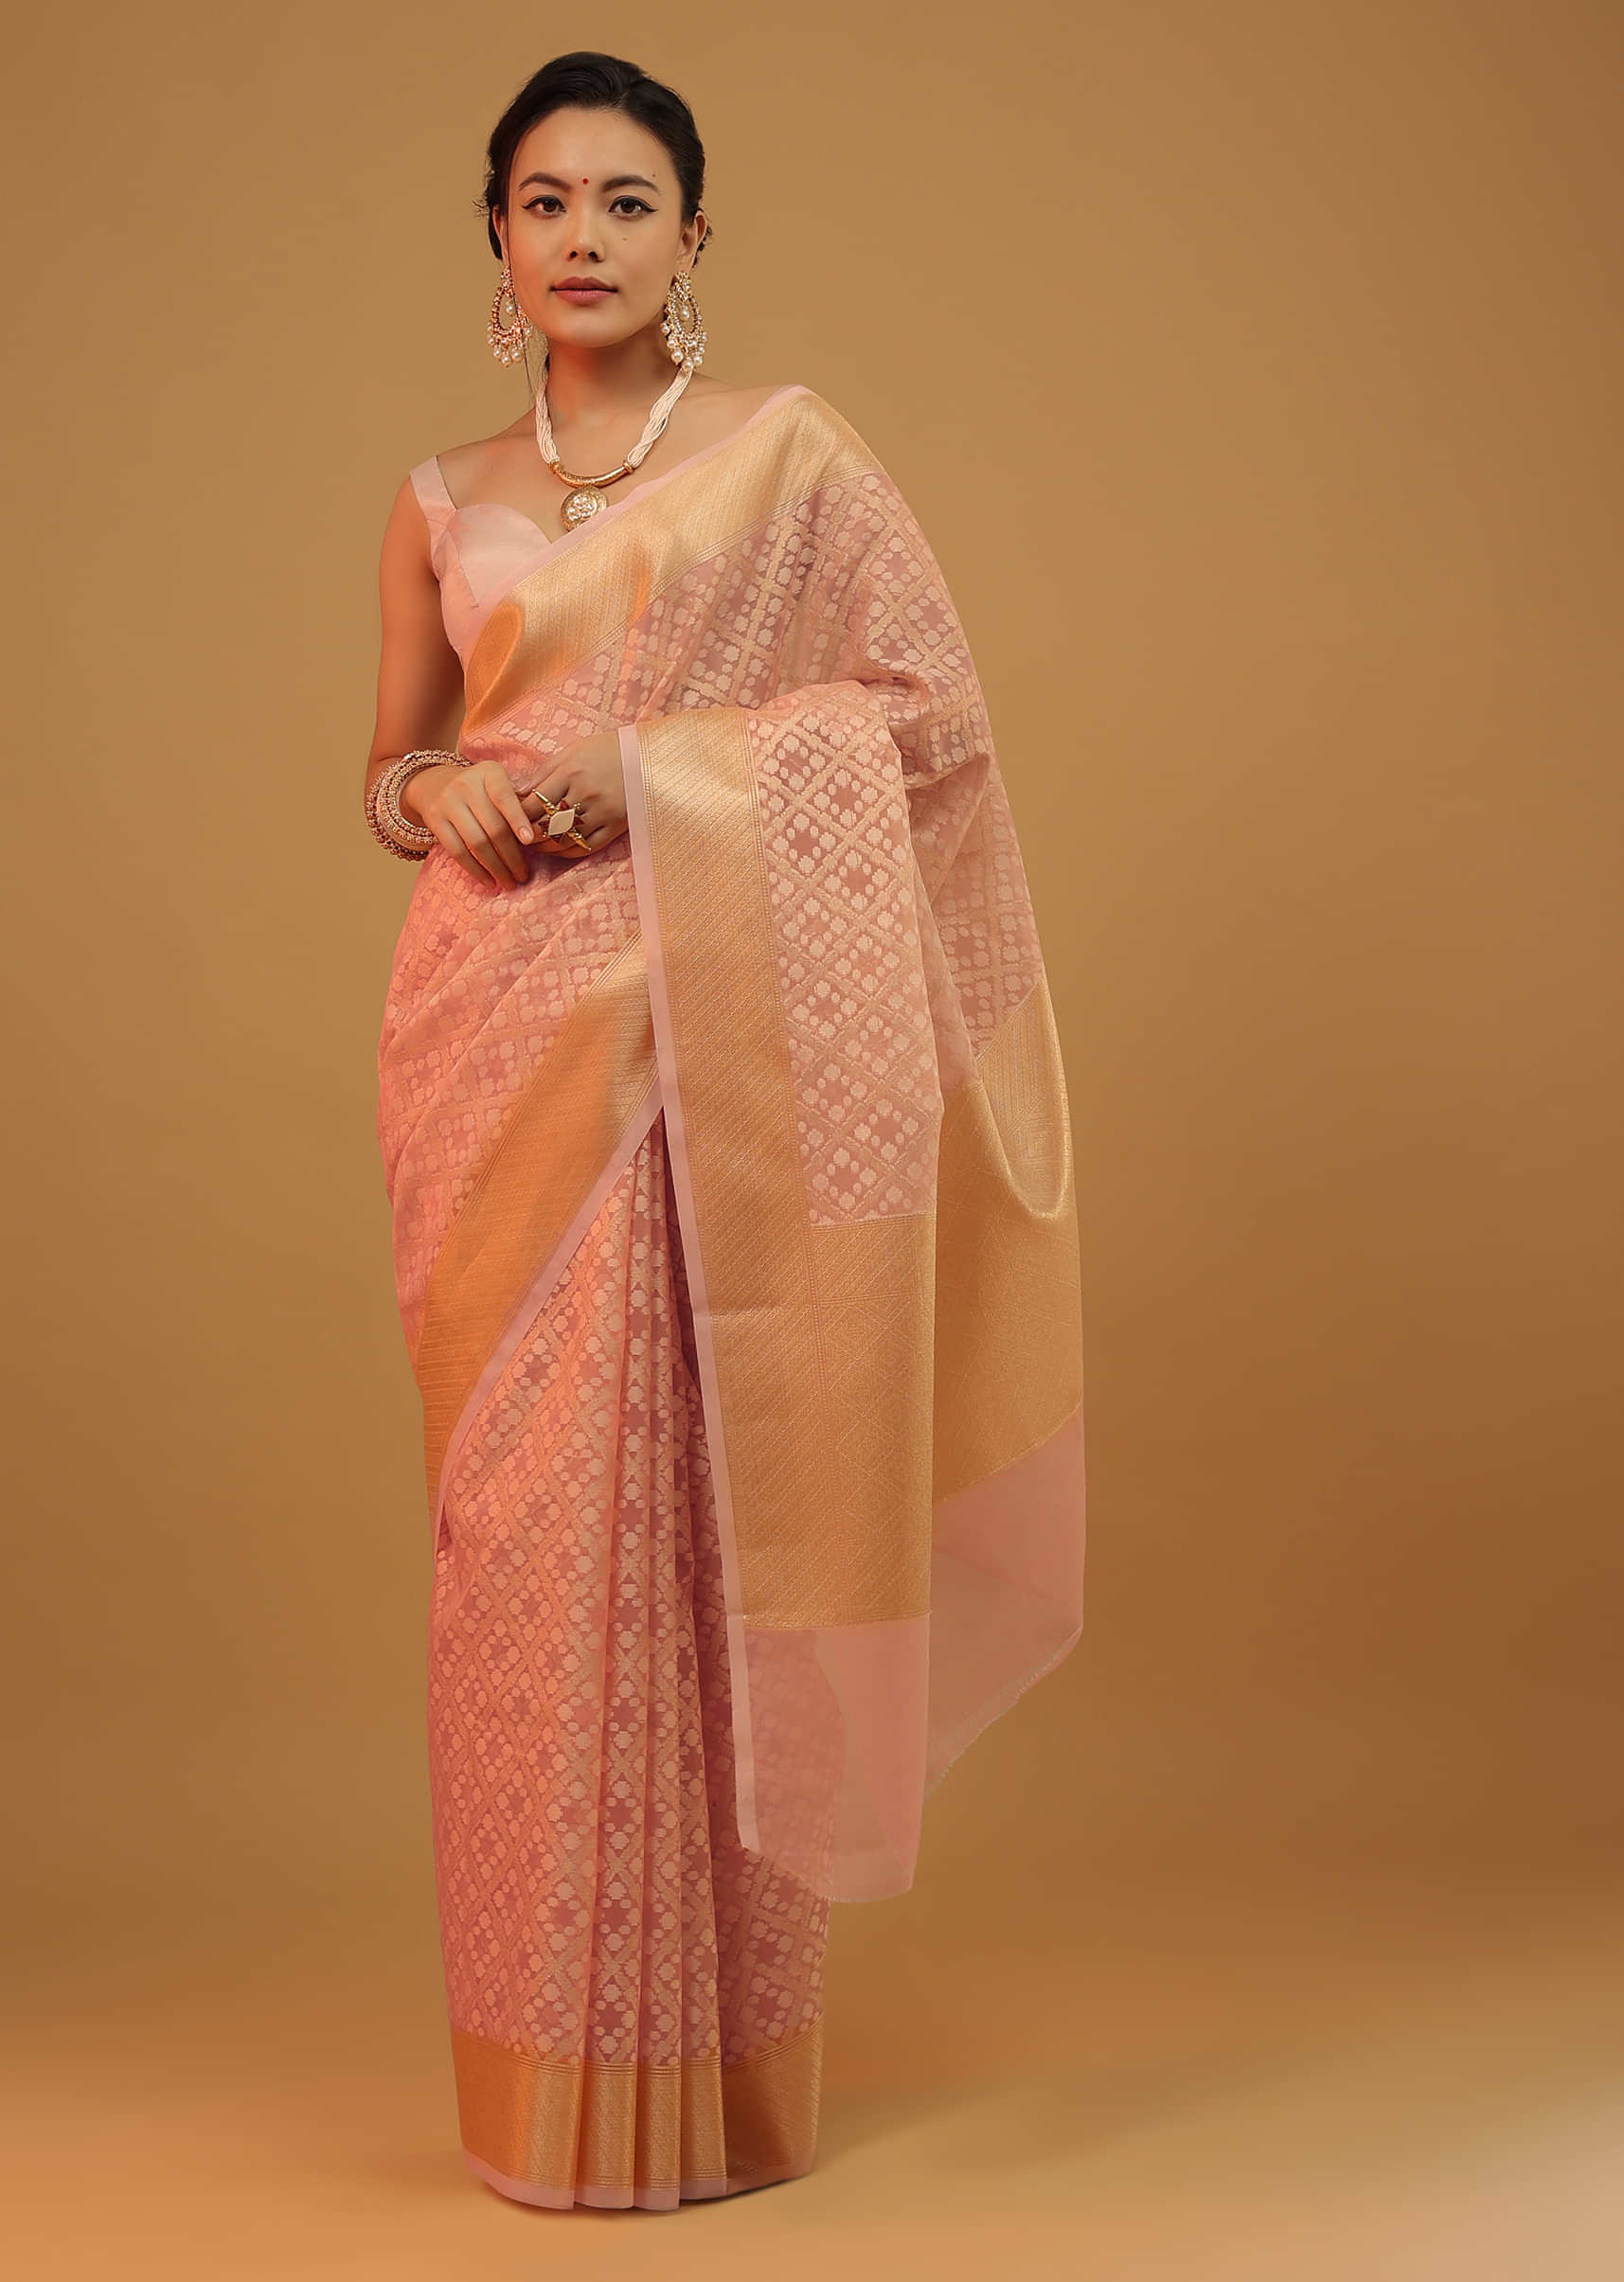 Apricot Blush Peach Saree In Pure Handloom Cotton With Banarasi Chanderi Weave